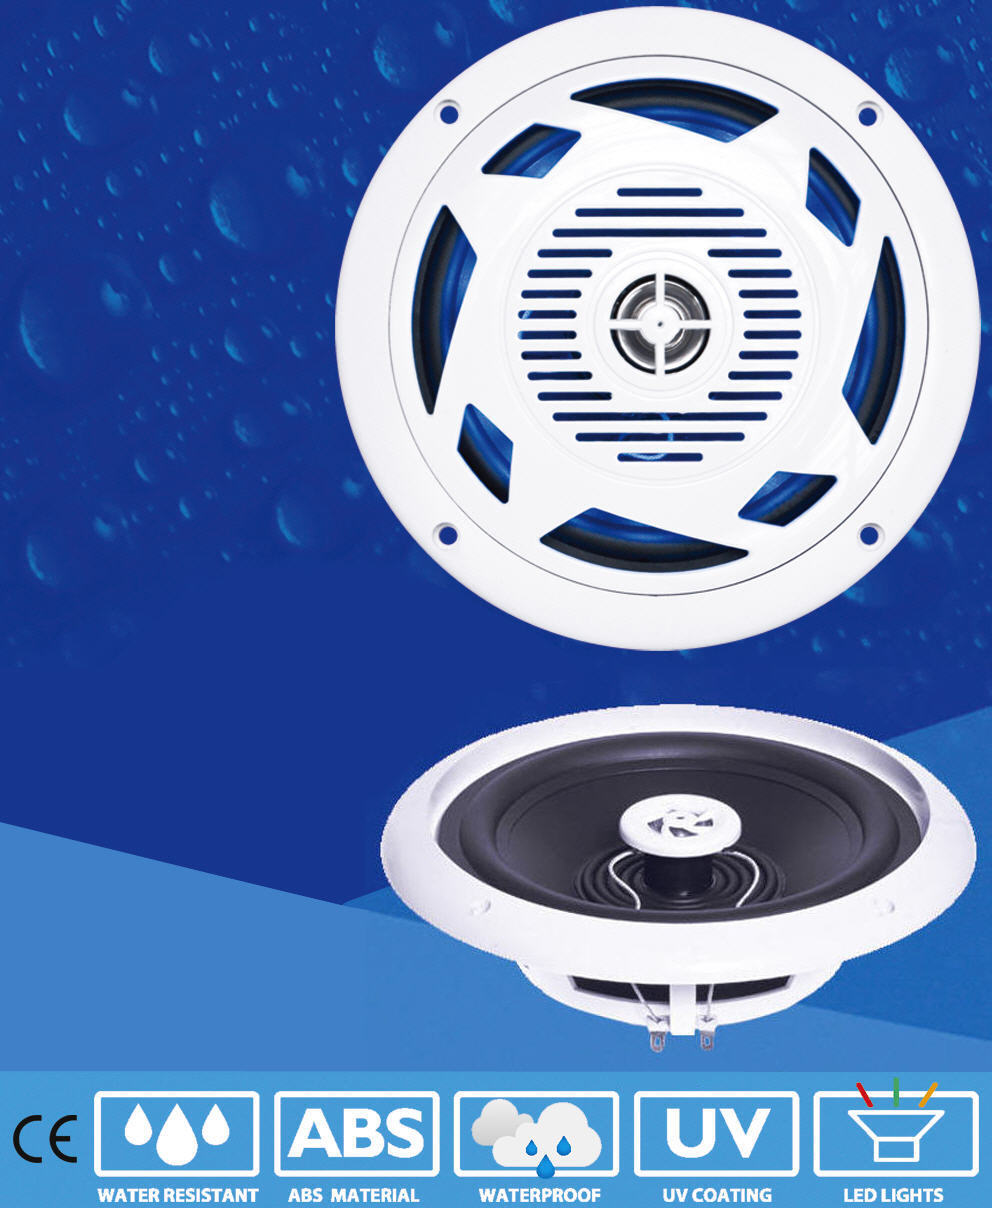 Altoparlanti/Casse WaterProof 2 Vie 80W - Diametro 147mm - Frequenze 800-2000 Hz - LED BLU